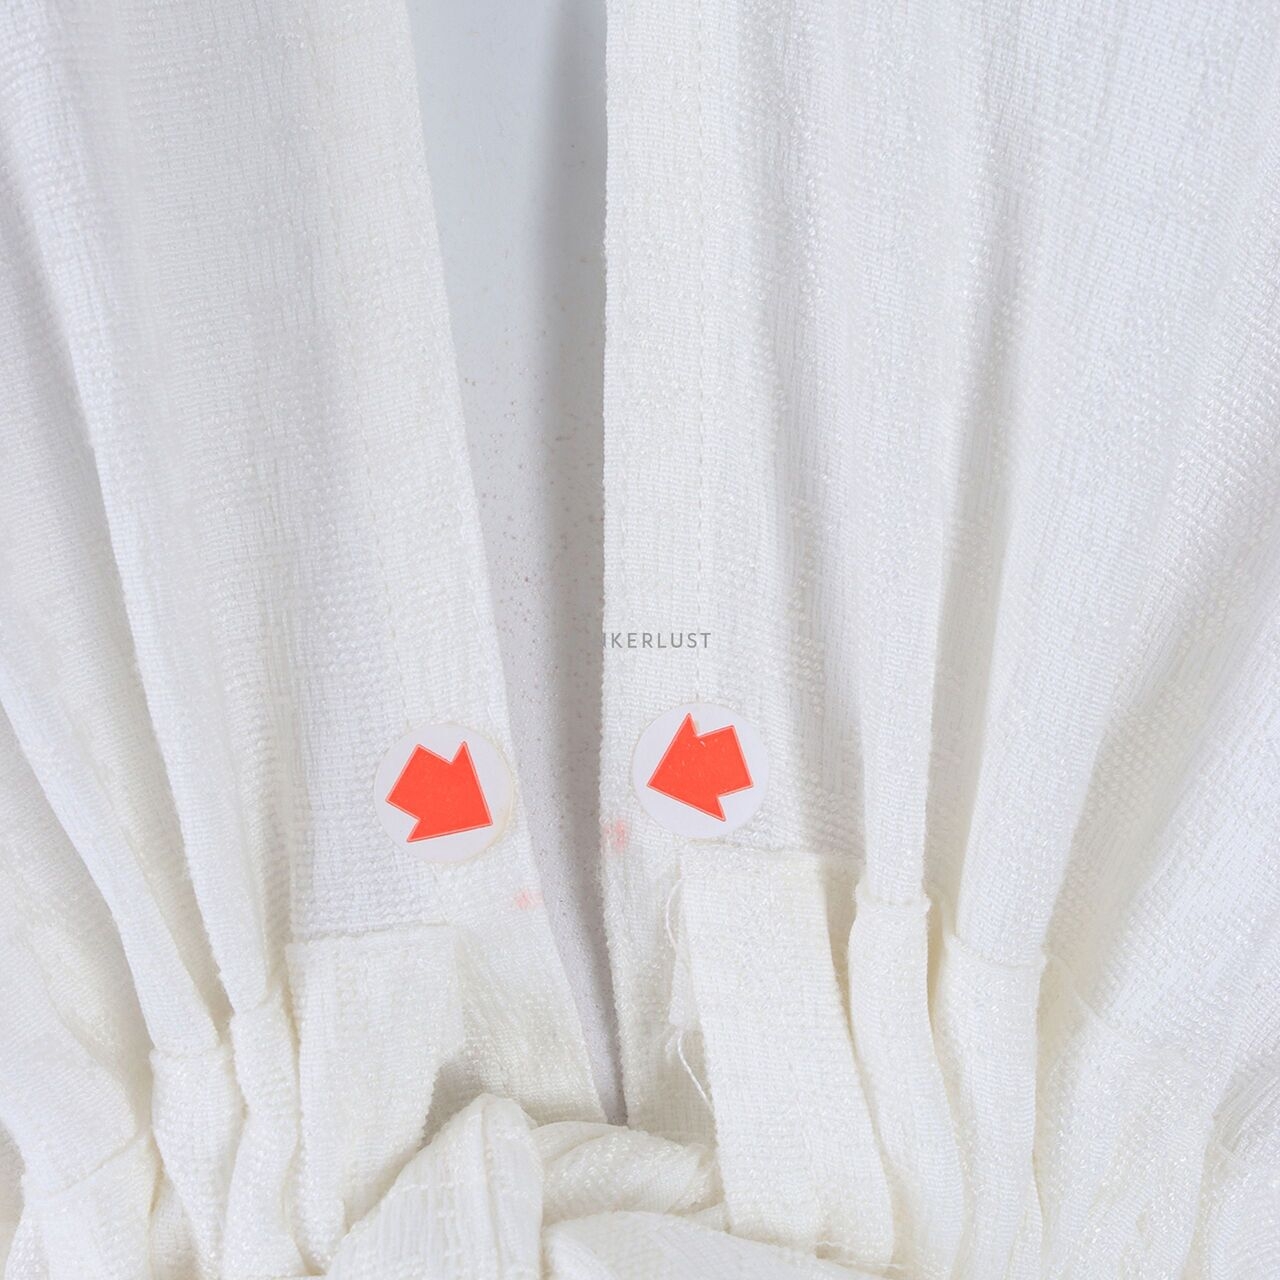 Benang Jarum Broken White Long Kimono